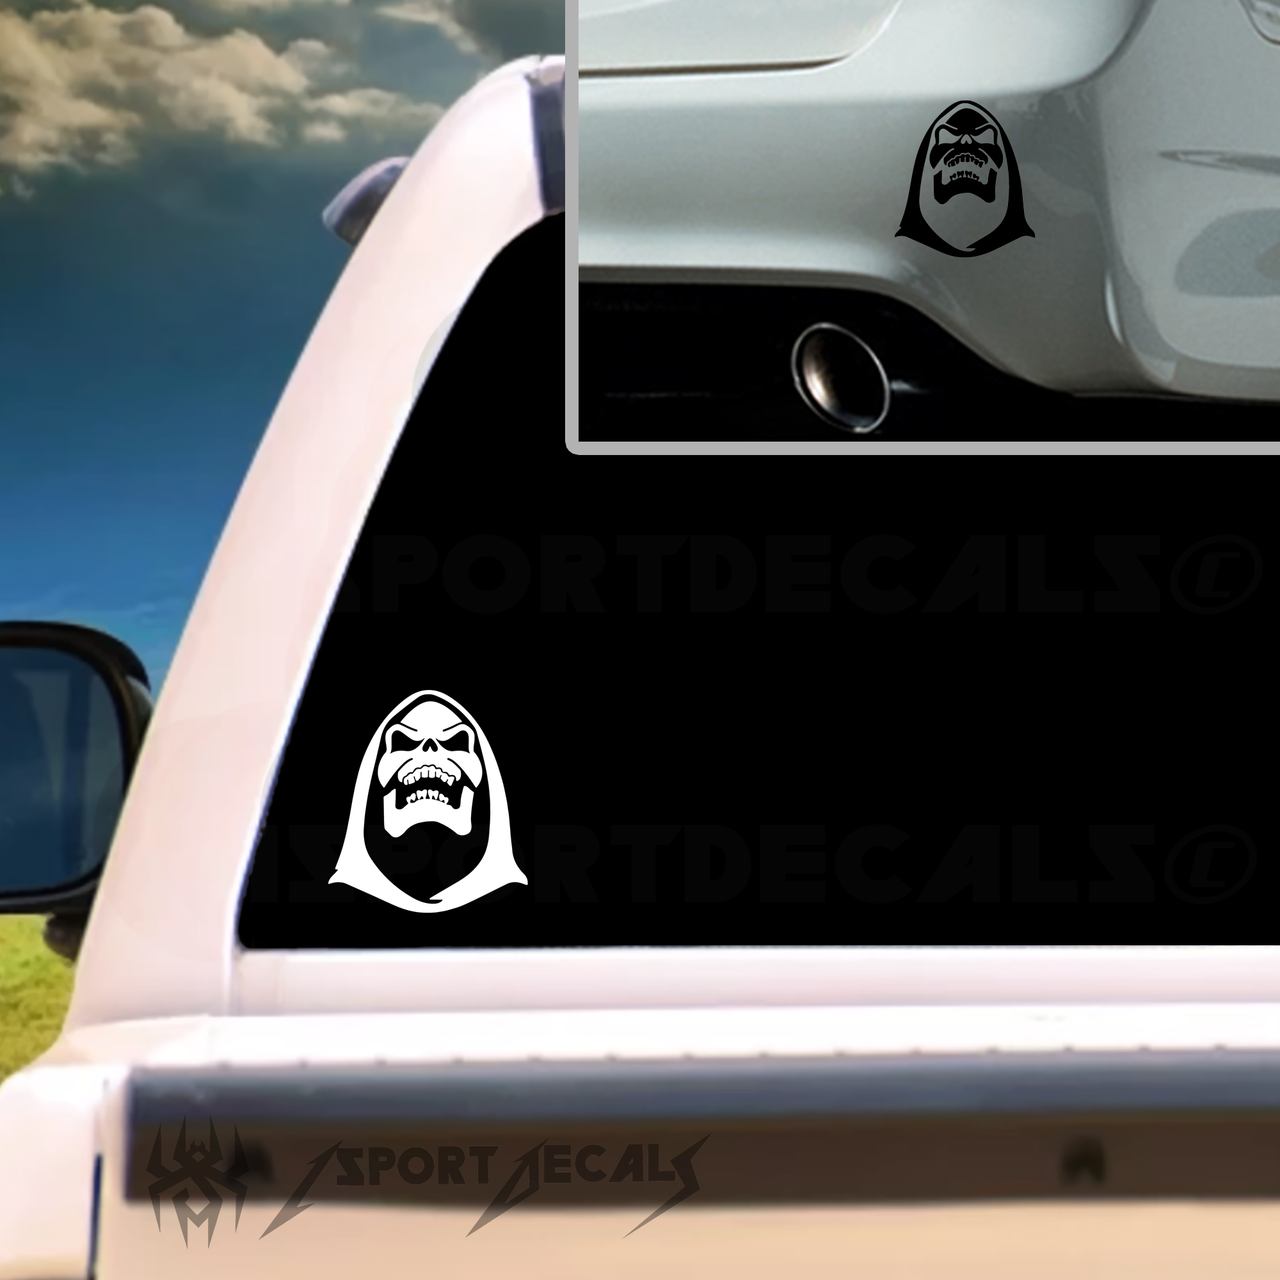 JoJo - (Menacing) Sticker - Sticker Graphic - Auto, Wall, Laptop, Cell,  Truck Sticker for Windows, Cars, Trucks